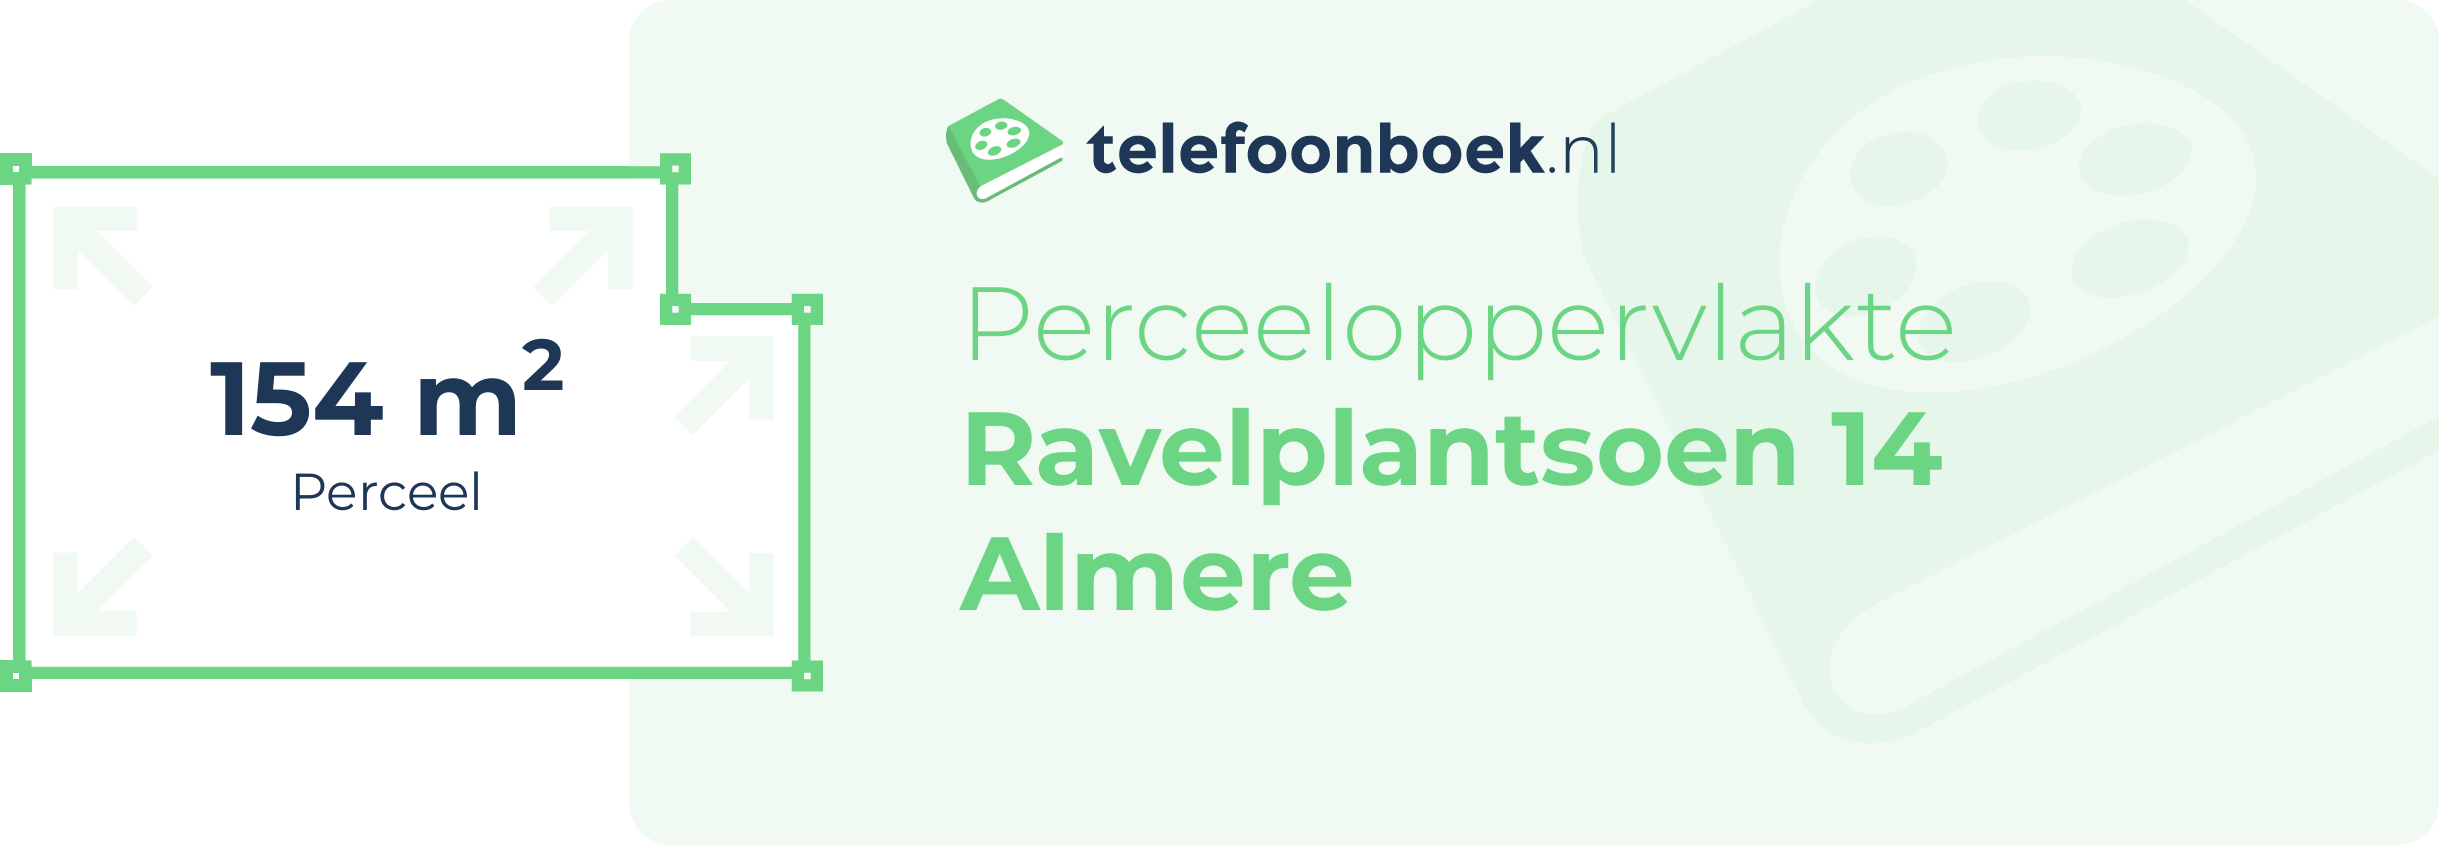 Perceeloppervlakte Ravelplantsoen 14 Almere